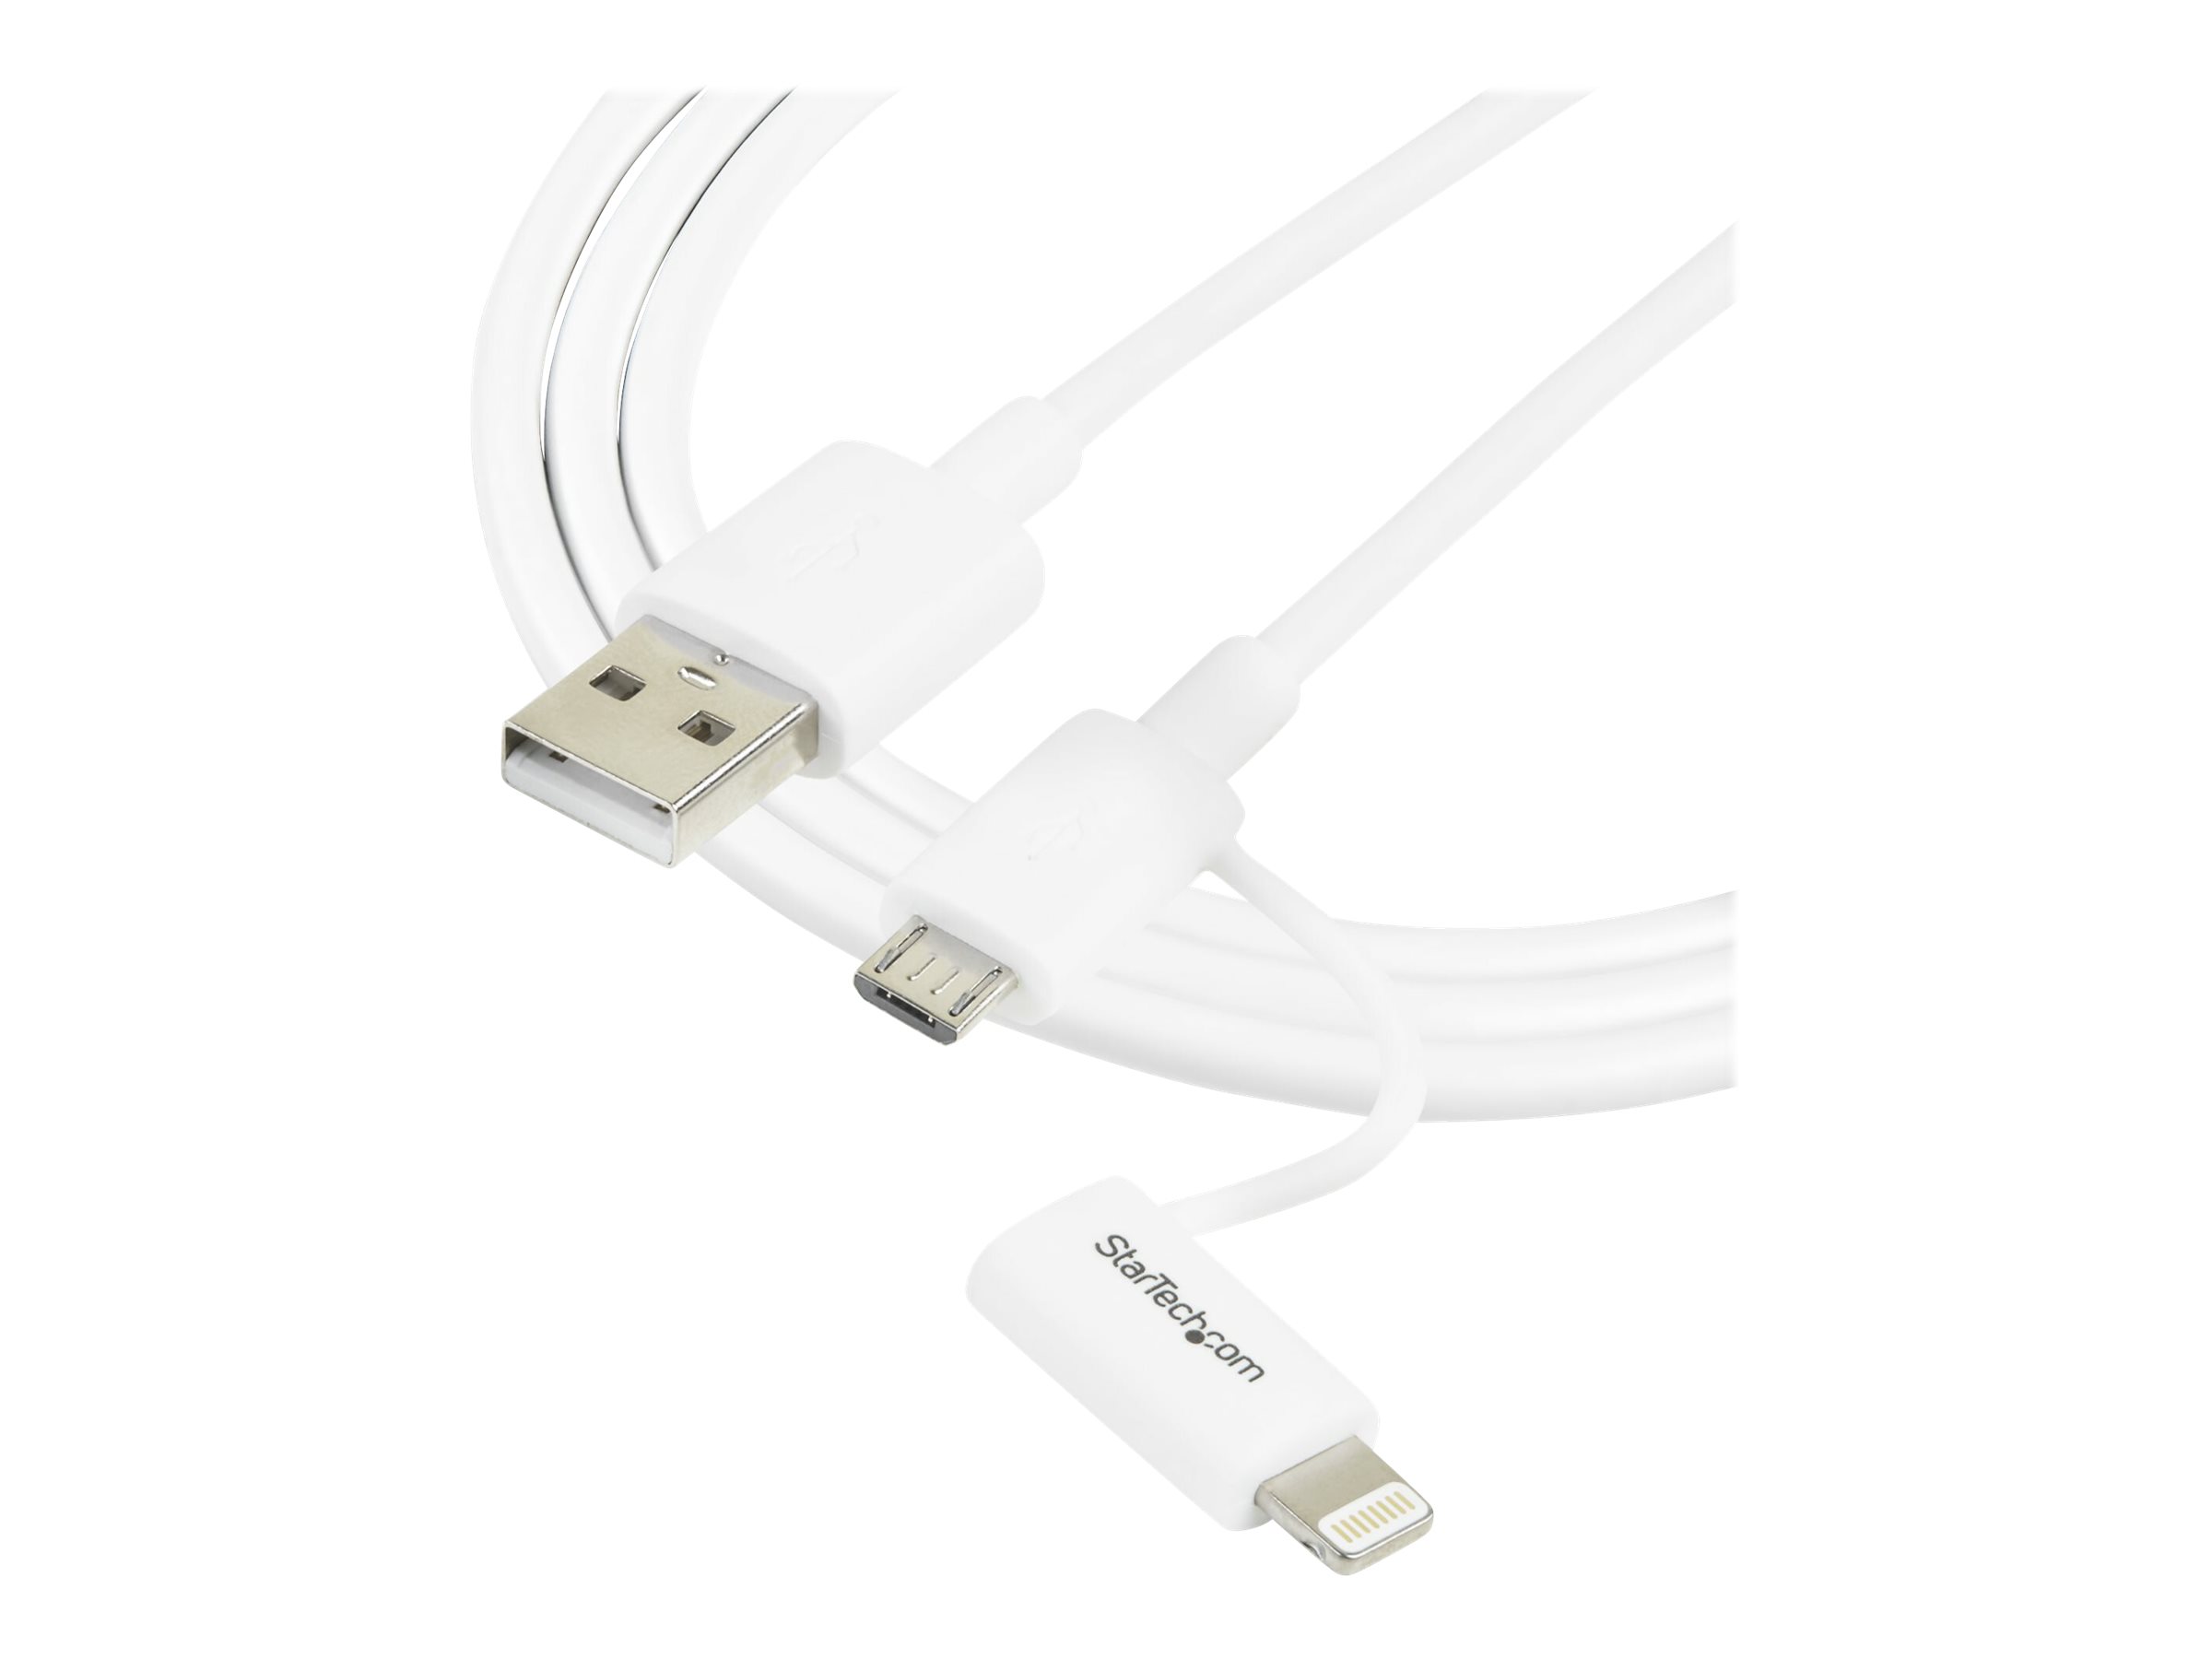 Cable lightning a USB para iPhone, iPad o iPod de PVC blanco 1m